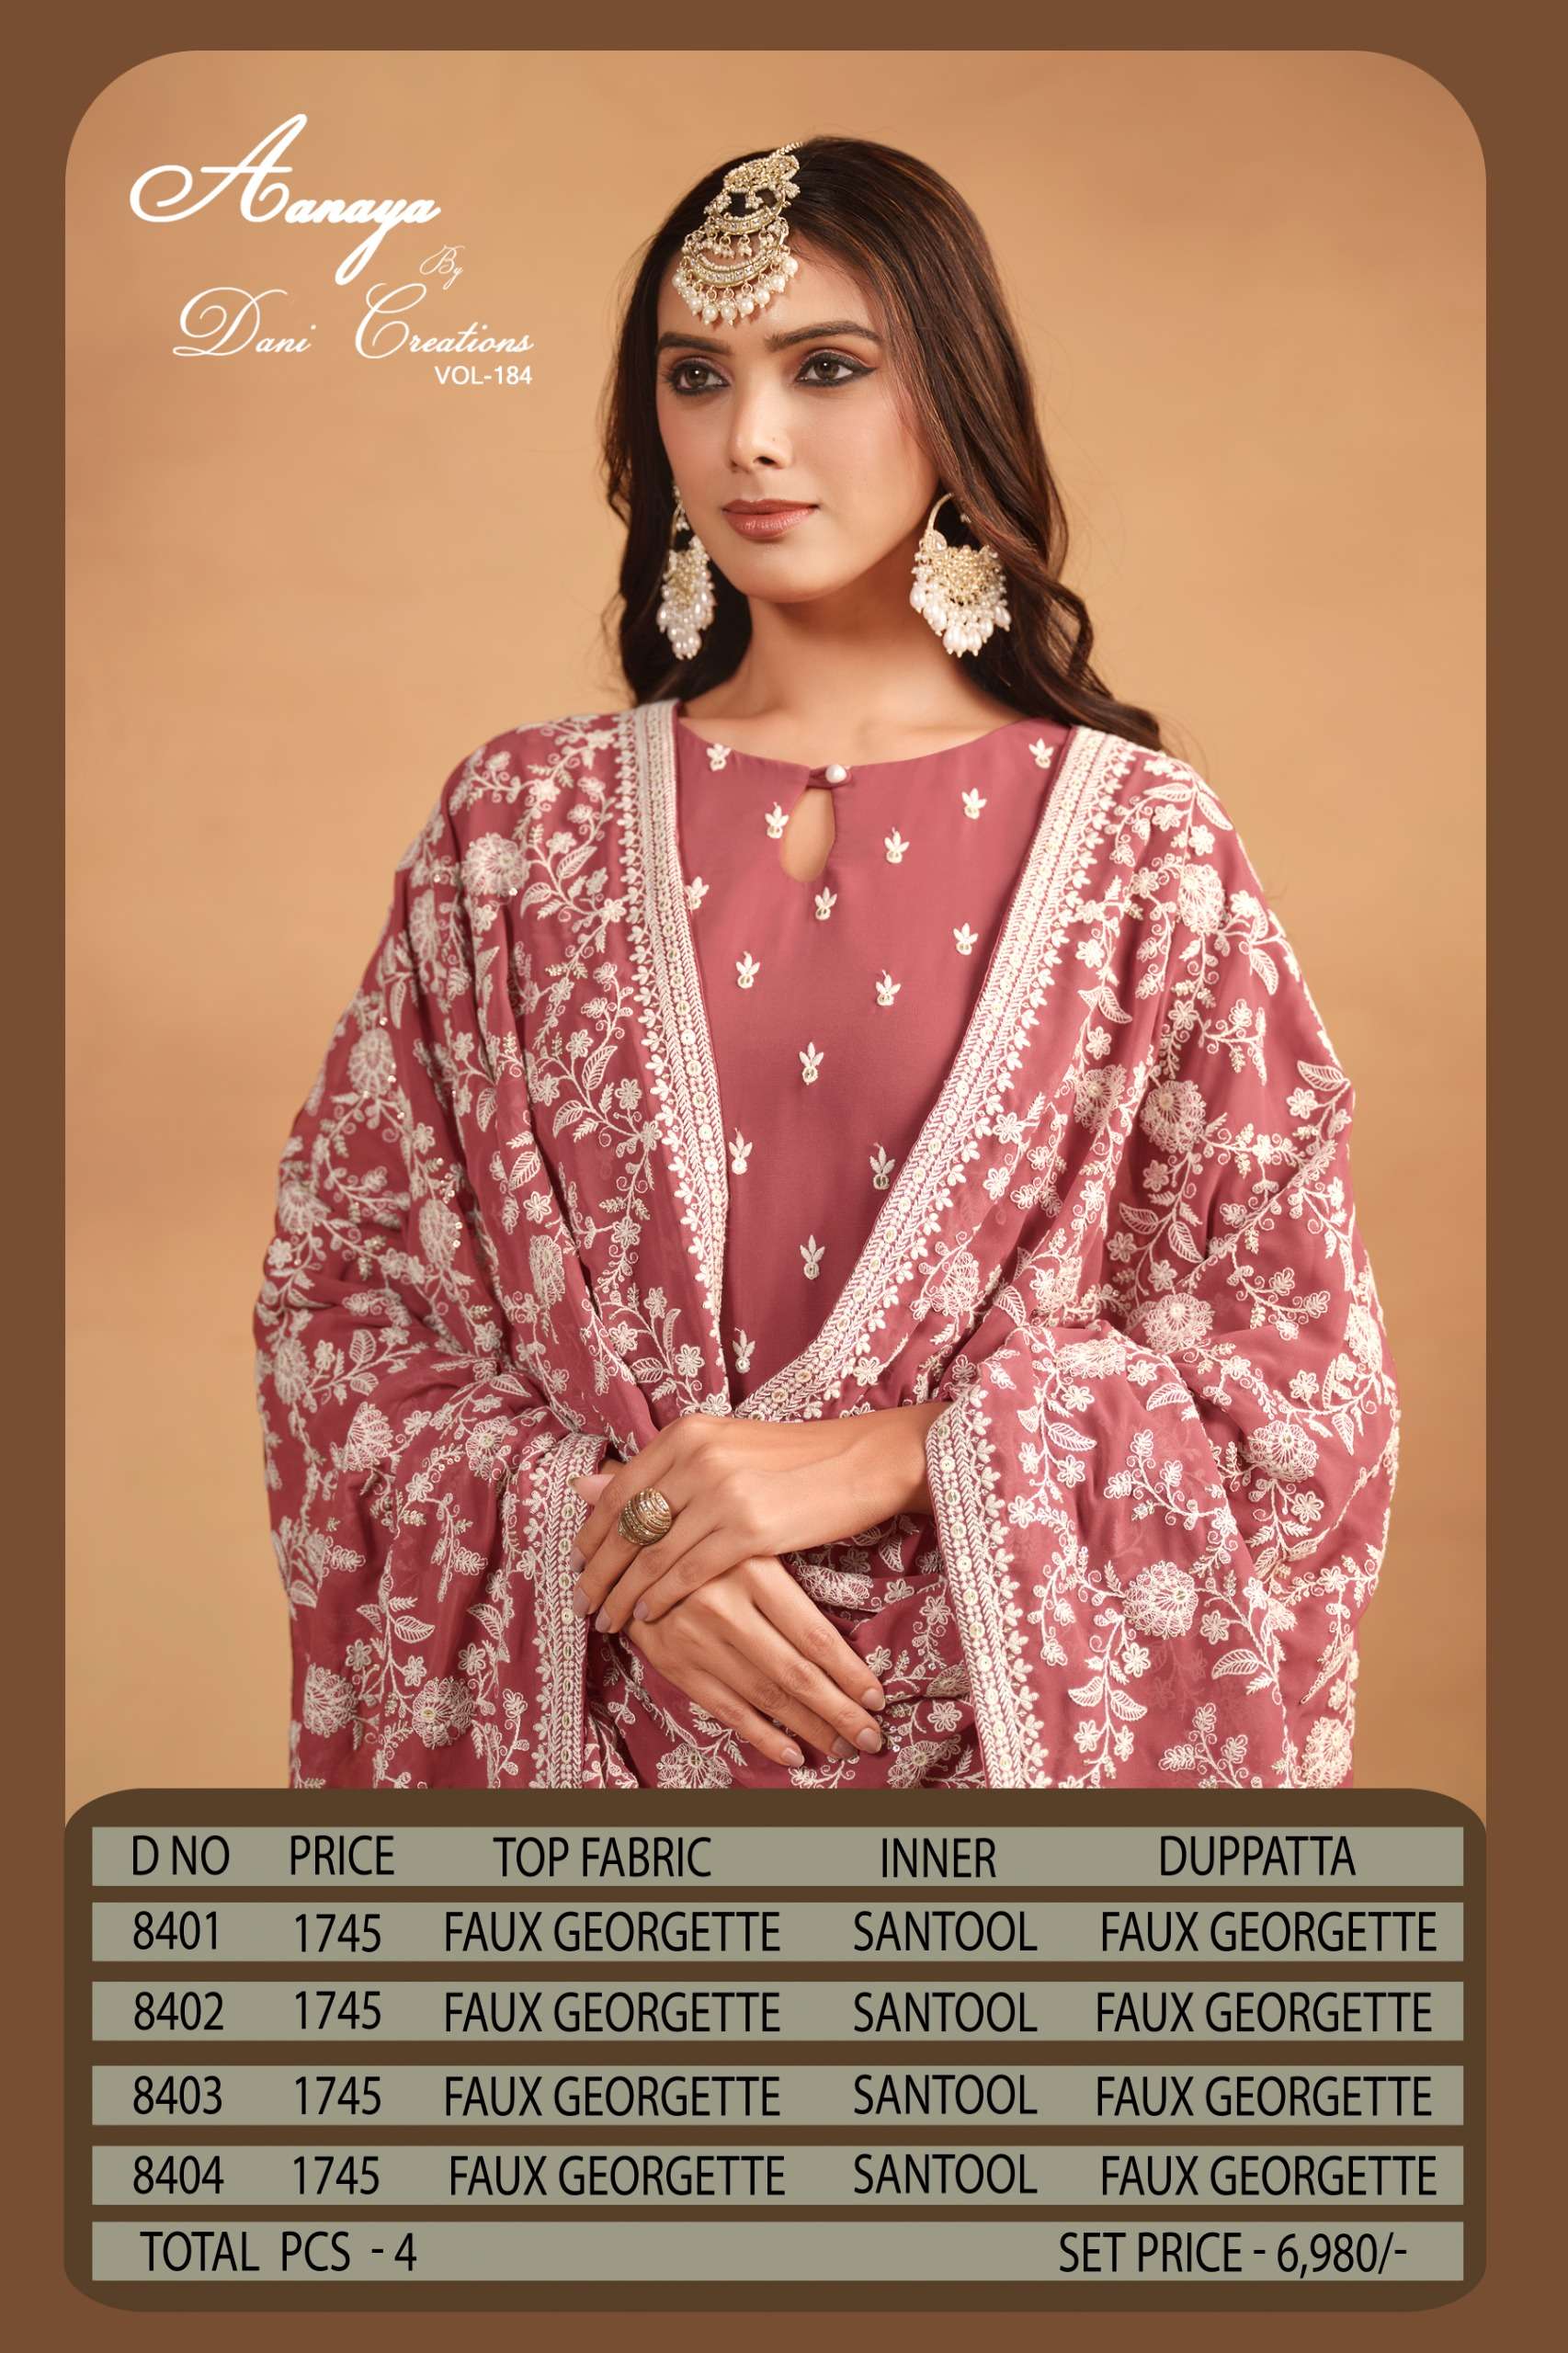 dani aanaya vol 184 faux georgrtte regal look salwar suit catalog